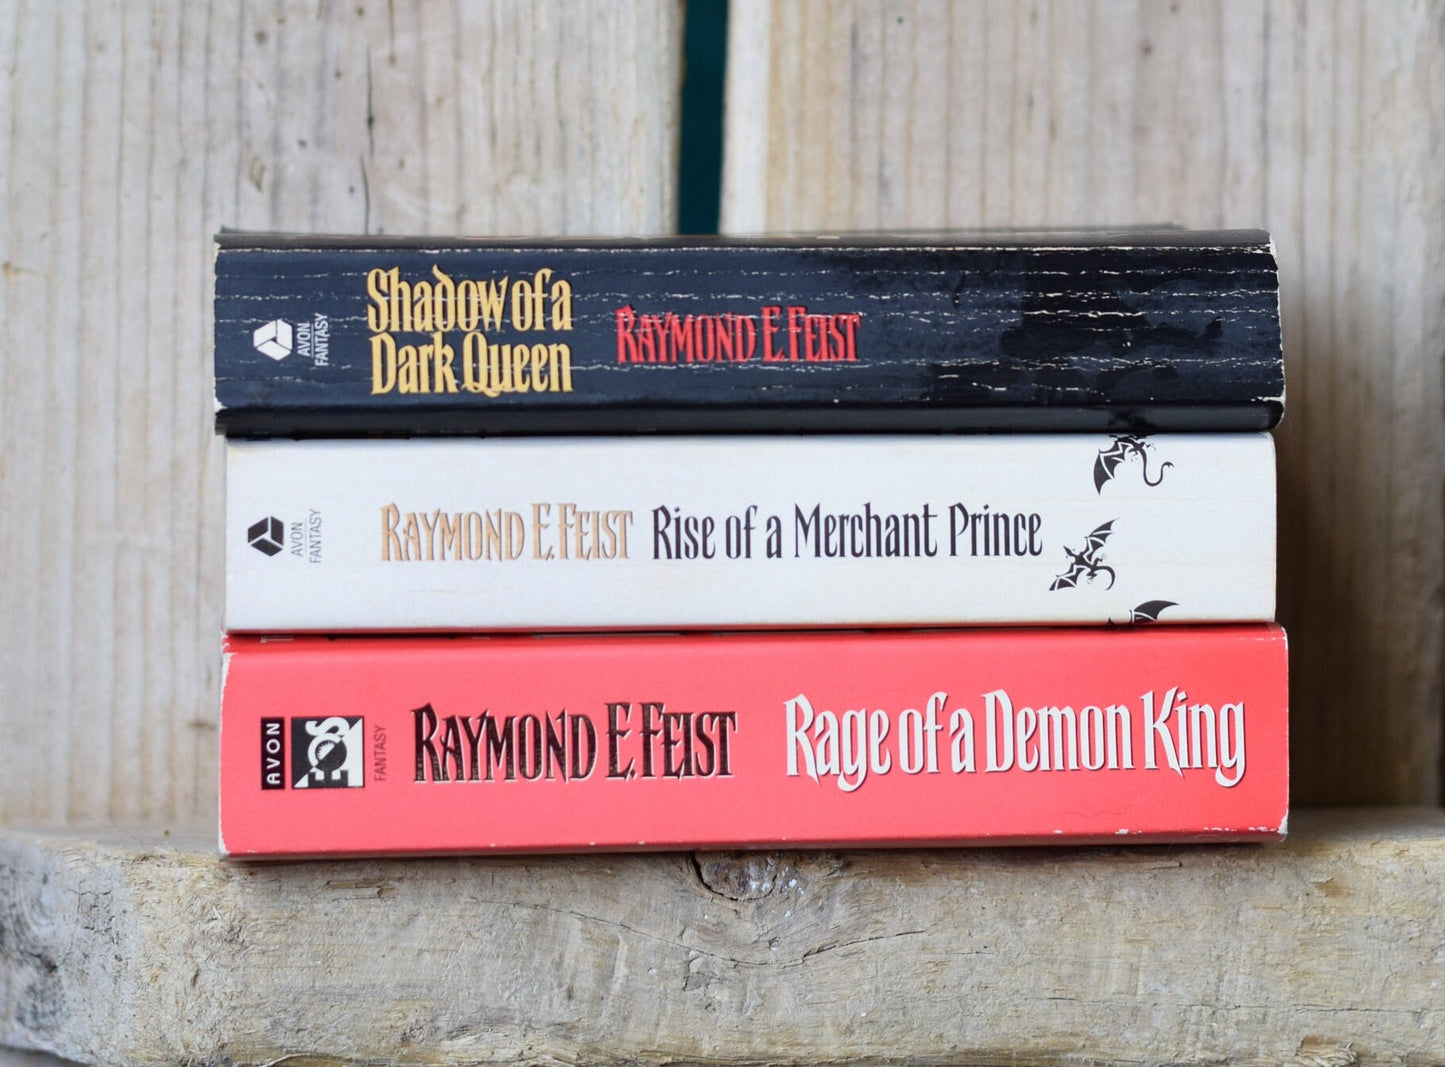 Vintage Fantasy Paperback Novels: Raymond E Feist - The Serpentwar Saga, Books 1-3